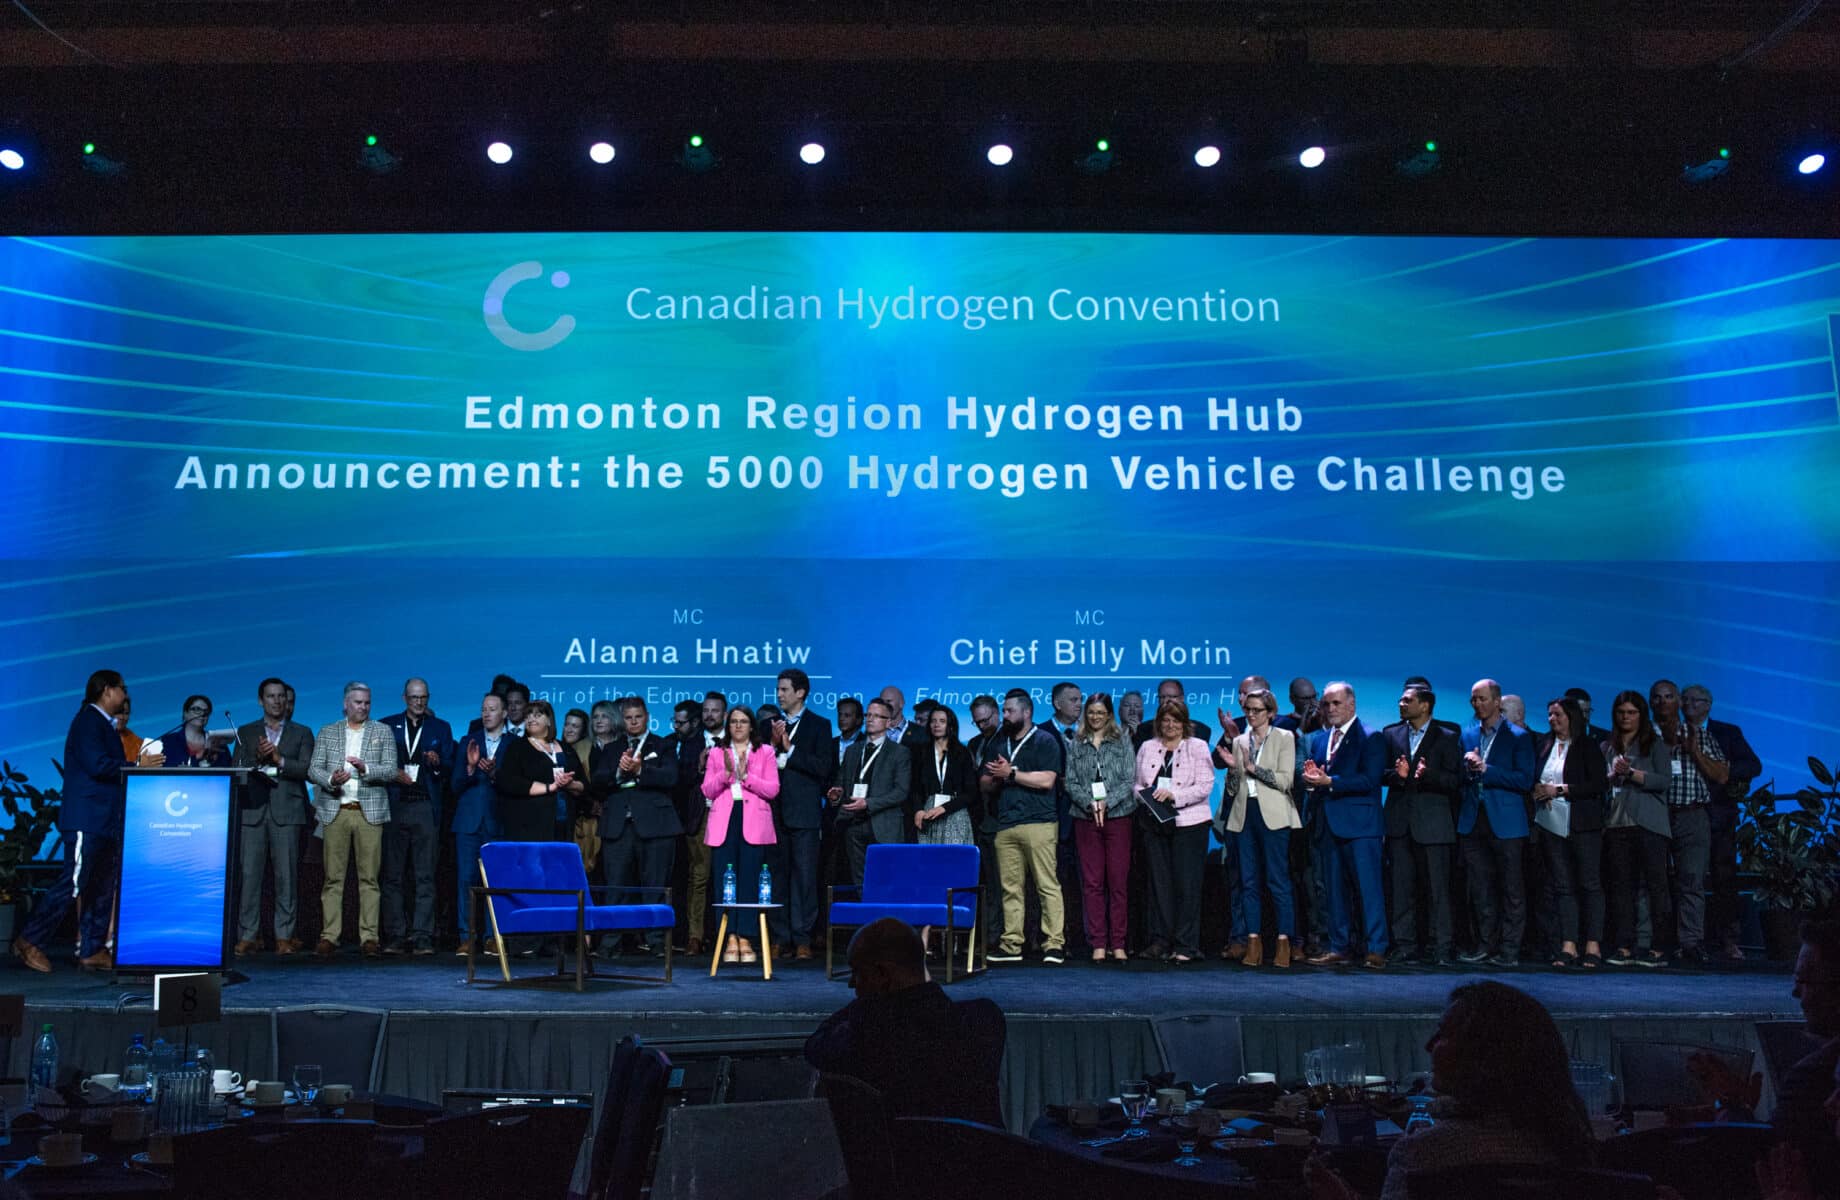 Edmonton rigging hydrogen announces the 500th vehicle challenge.